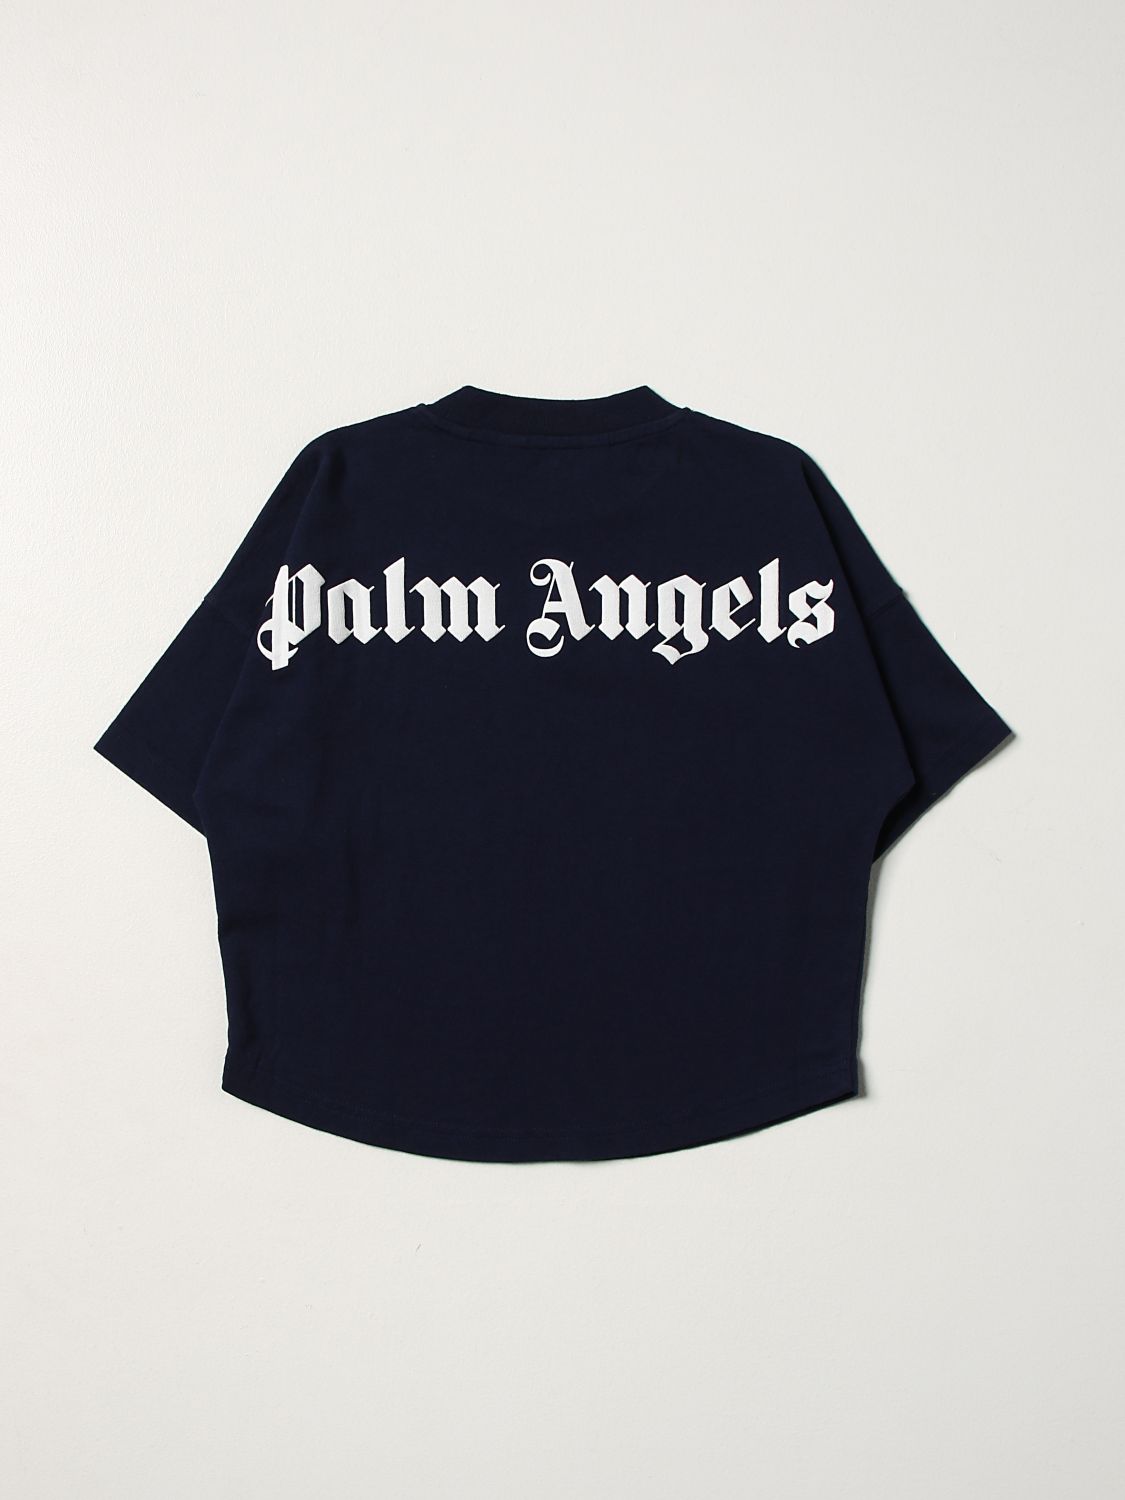 T-Shirt Palm Angels: T-shirt kinder Palm Angels blau 2